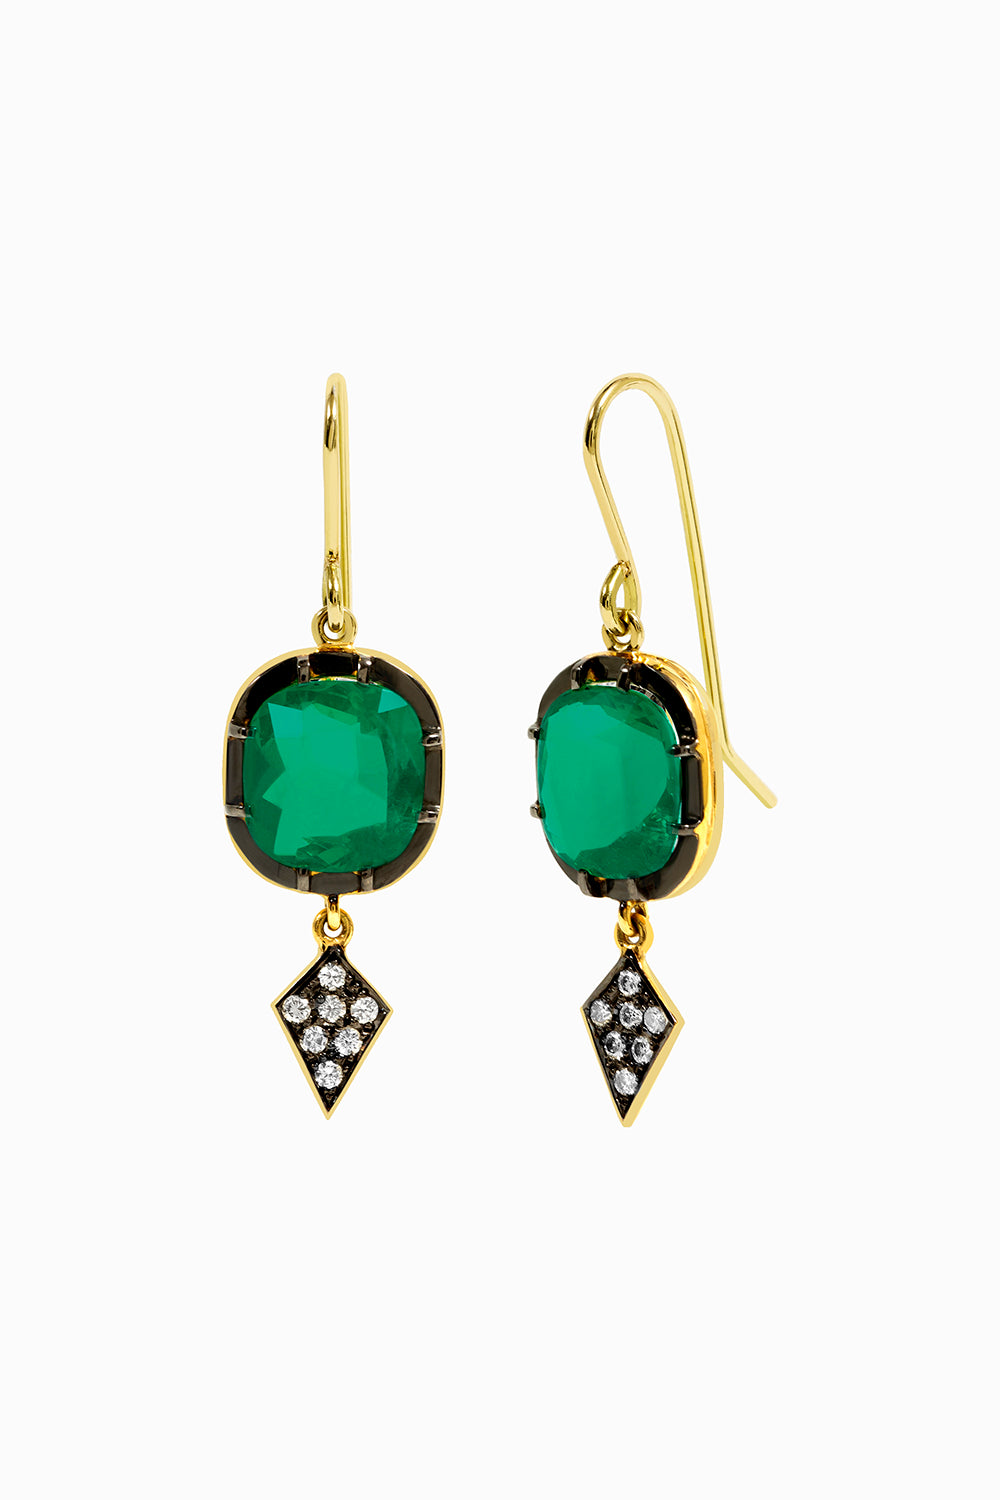 Cushion emeralds hook earrings